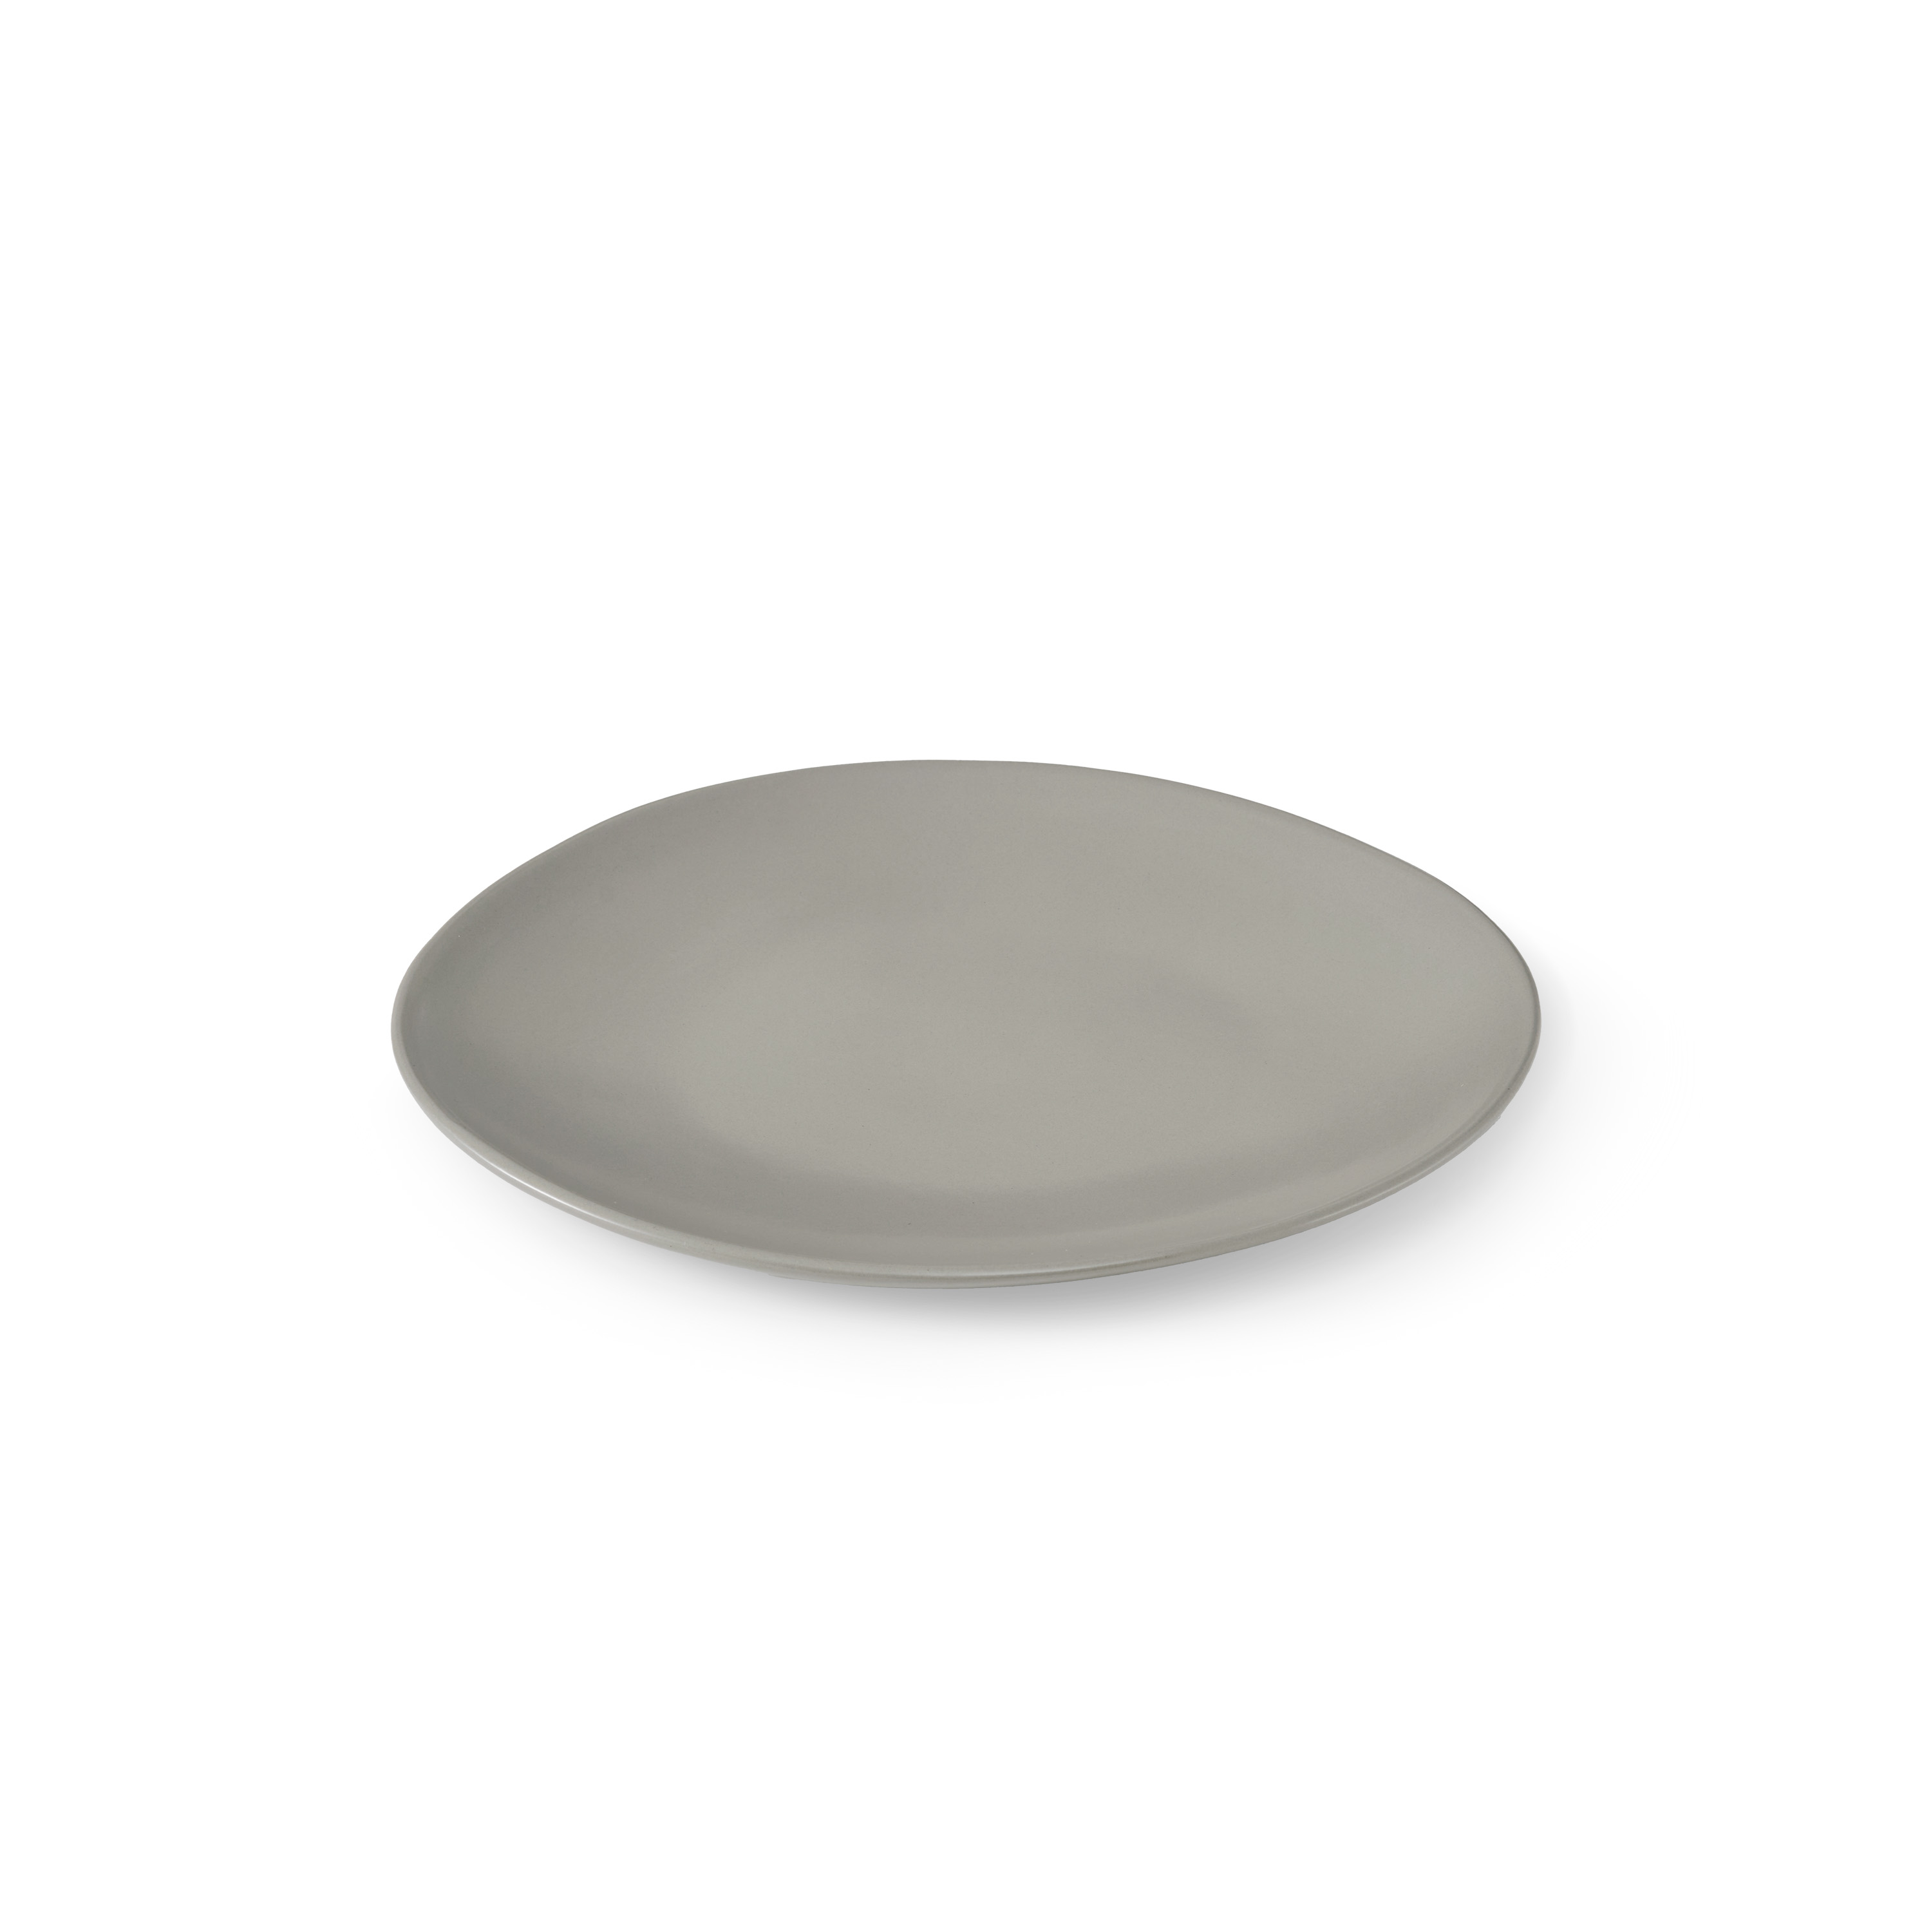 Tonkin Round Plate M: Light grey